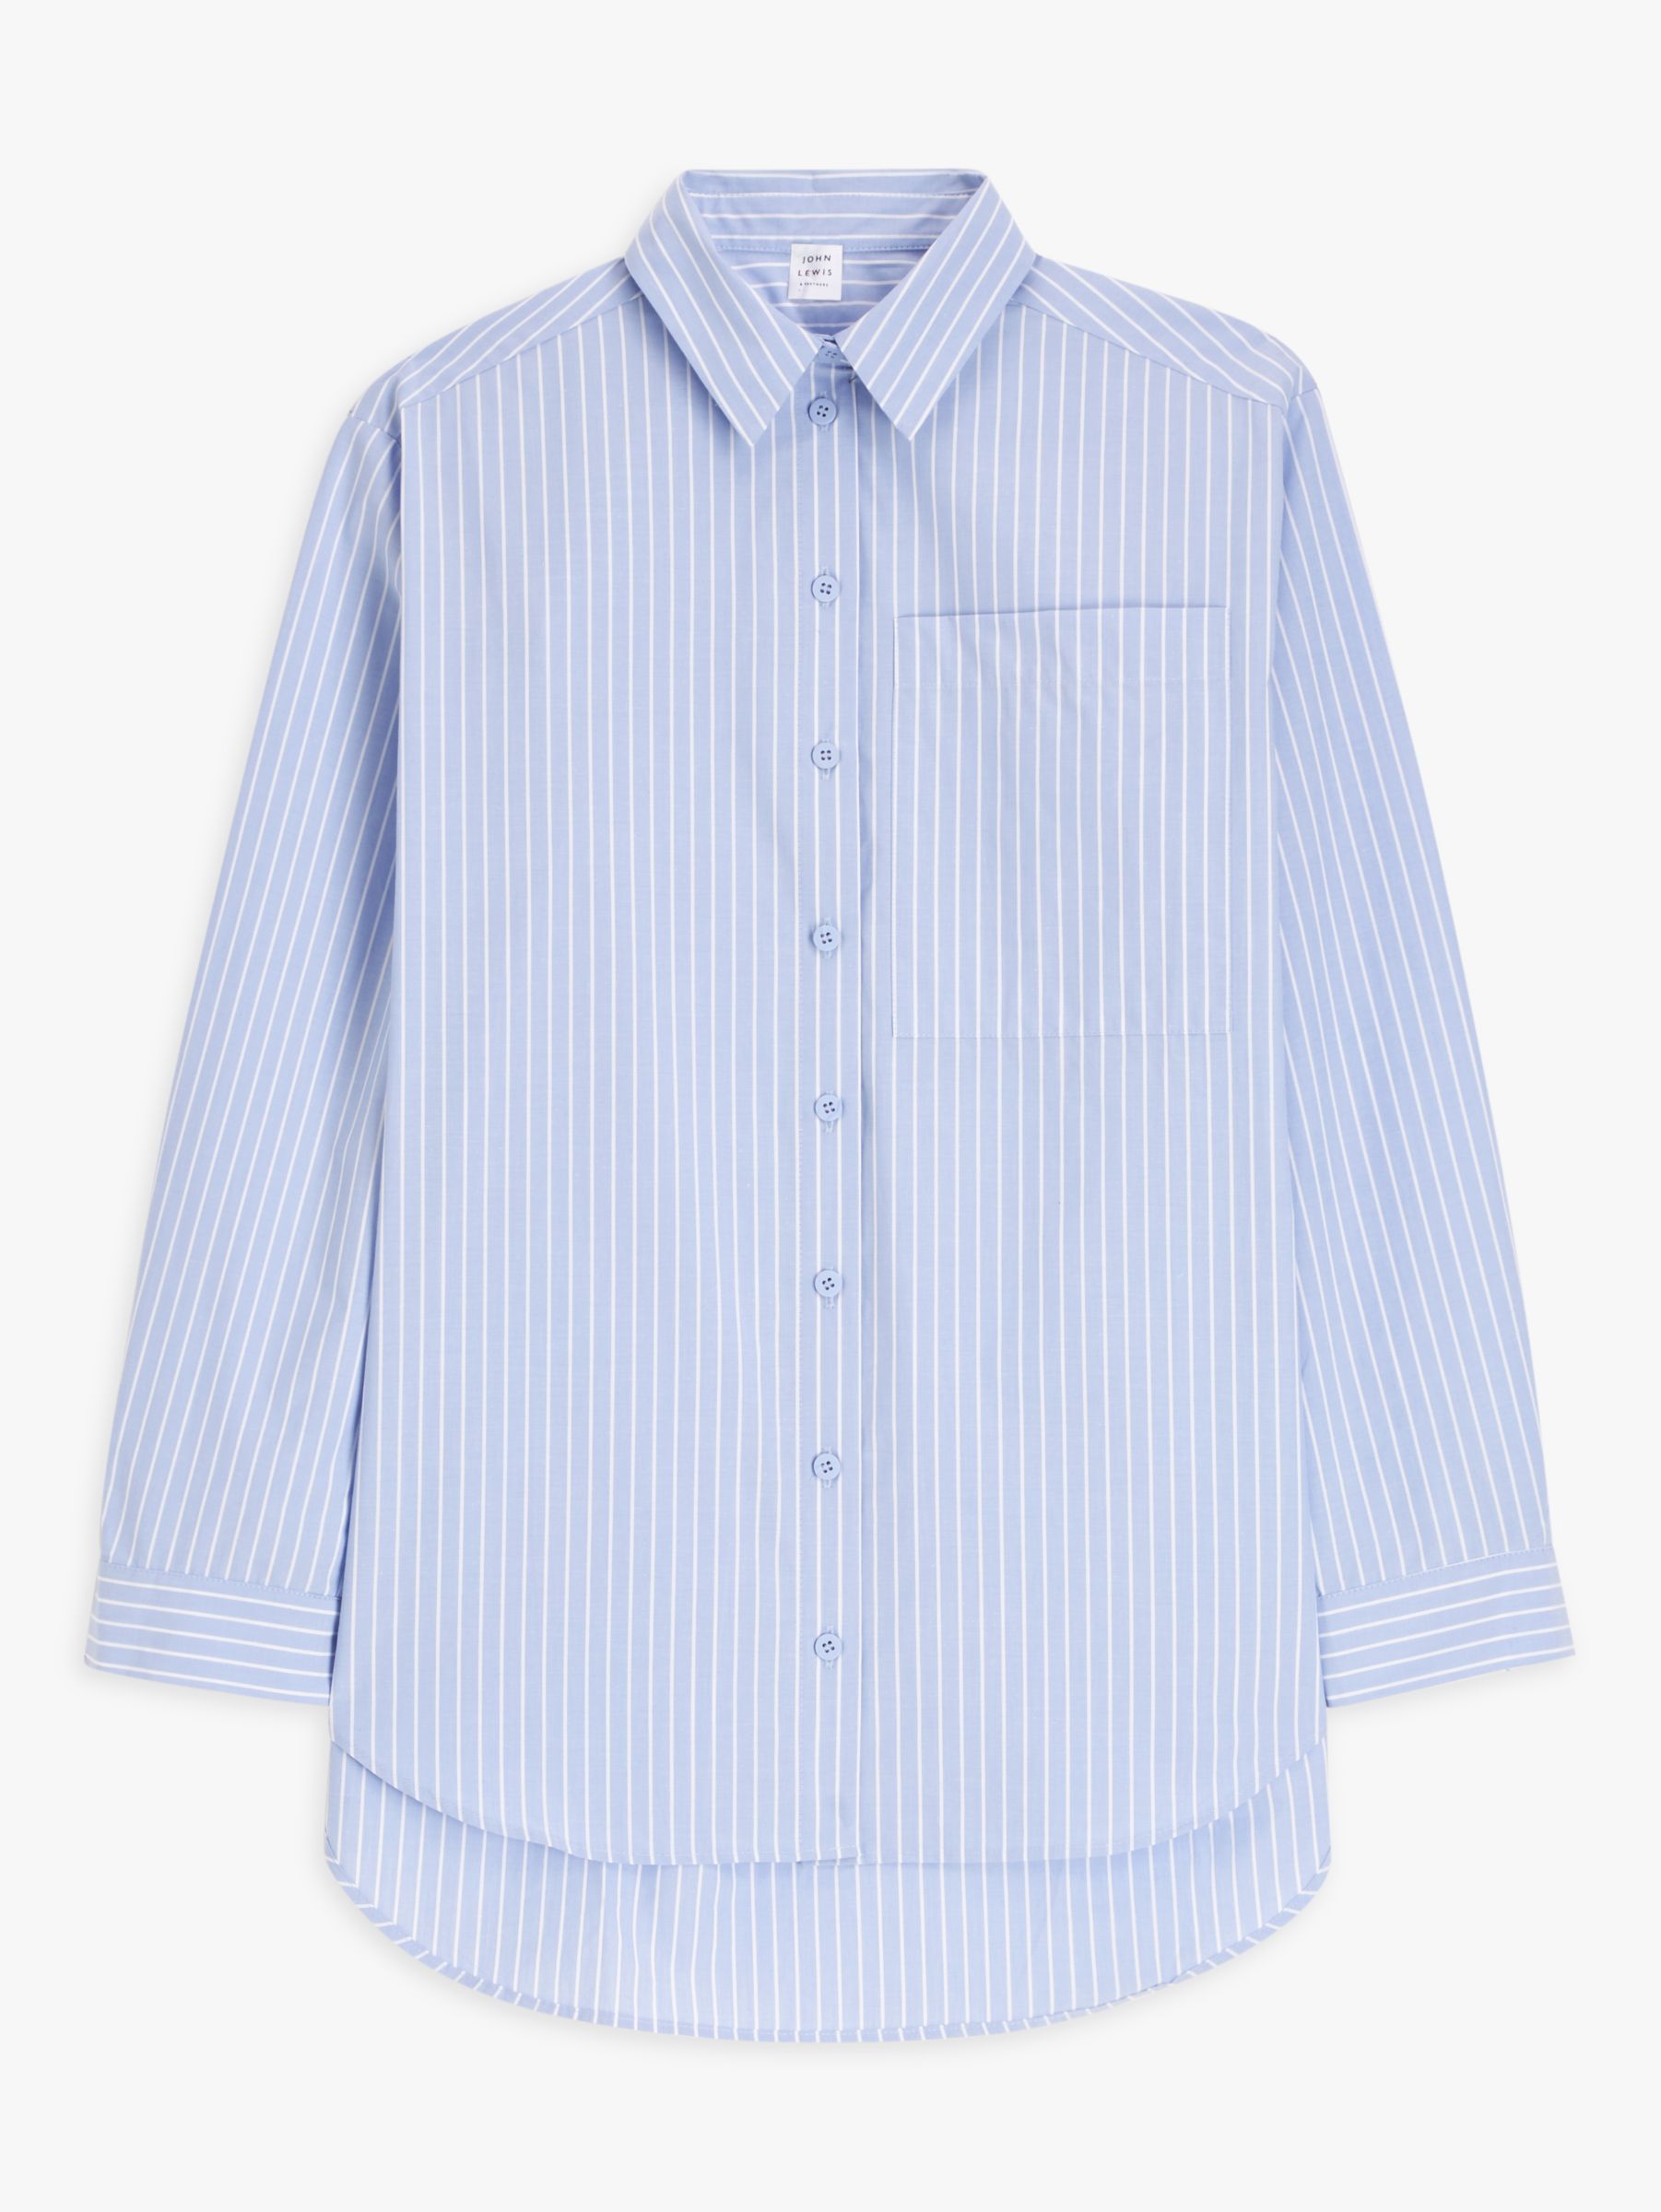 John Lewis Stripe Cotton Shirt, Light Blue